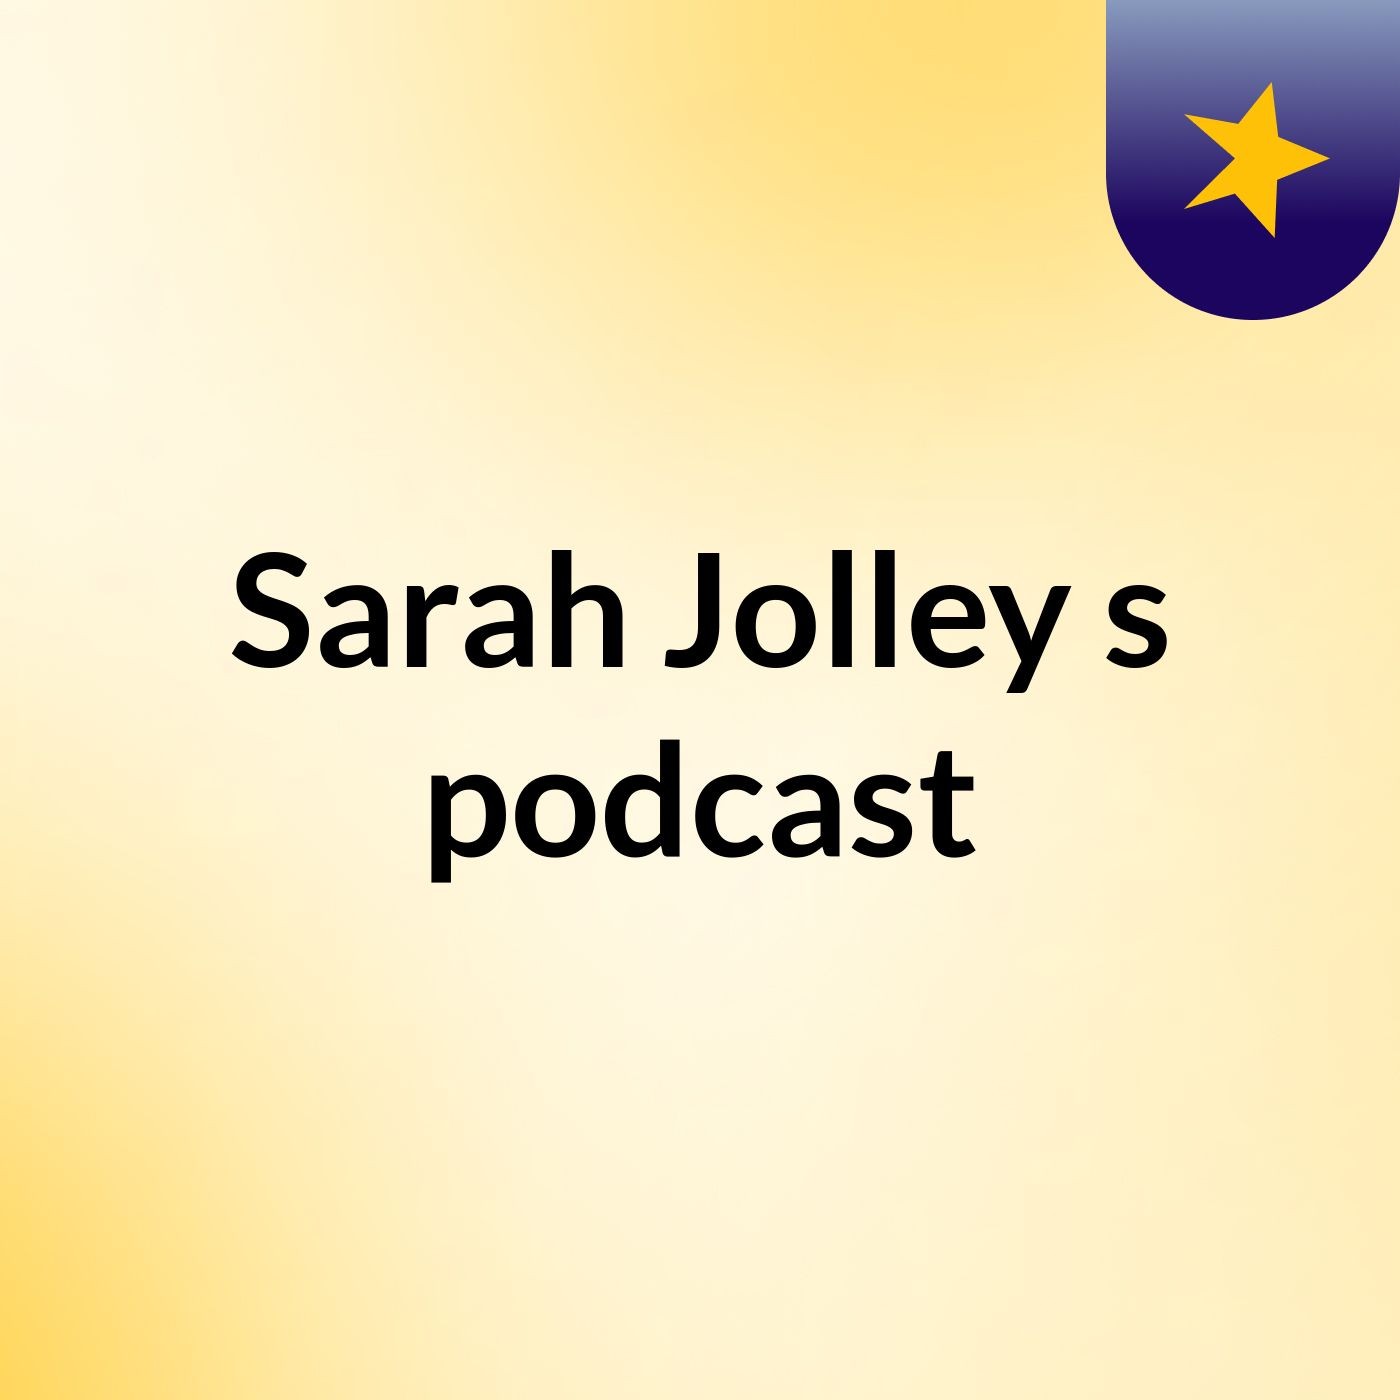 Episode 2 - Sarah Jolley's podcast